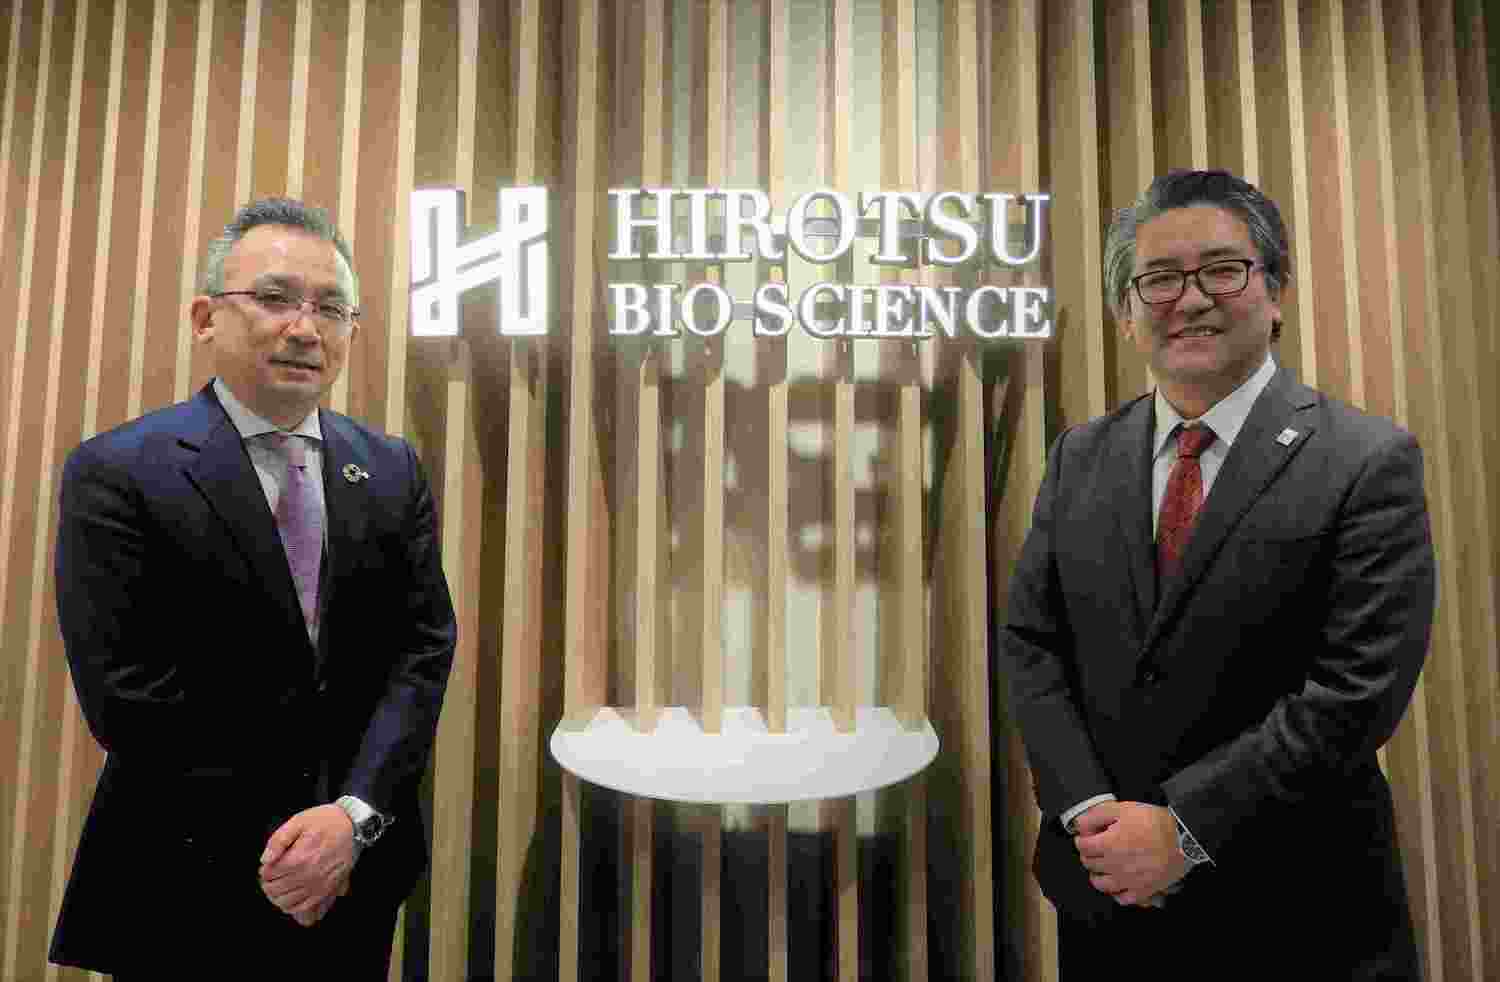 Life Innovation Business总部副总裁兼负责人Hiroshi Nakao（左起）以及Hirotsu Bio Science首席执员Takaaki Hirotsu合影。-资料来源：BioSpectrum/图摘自Soya Cincau-